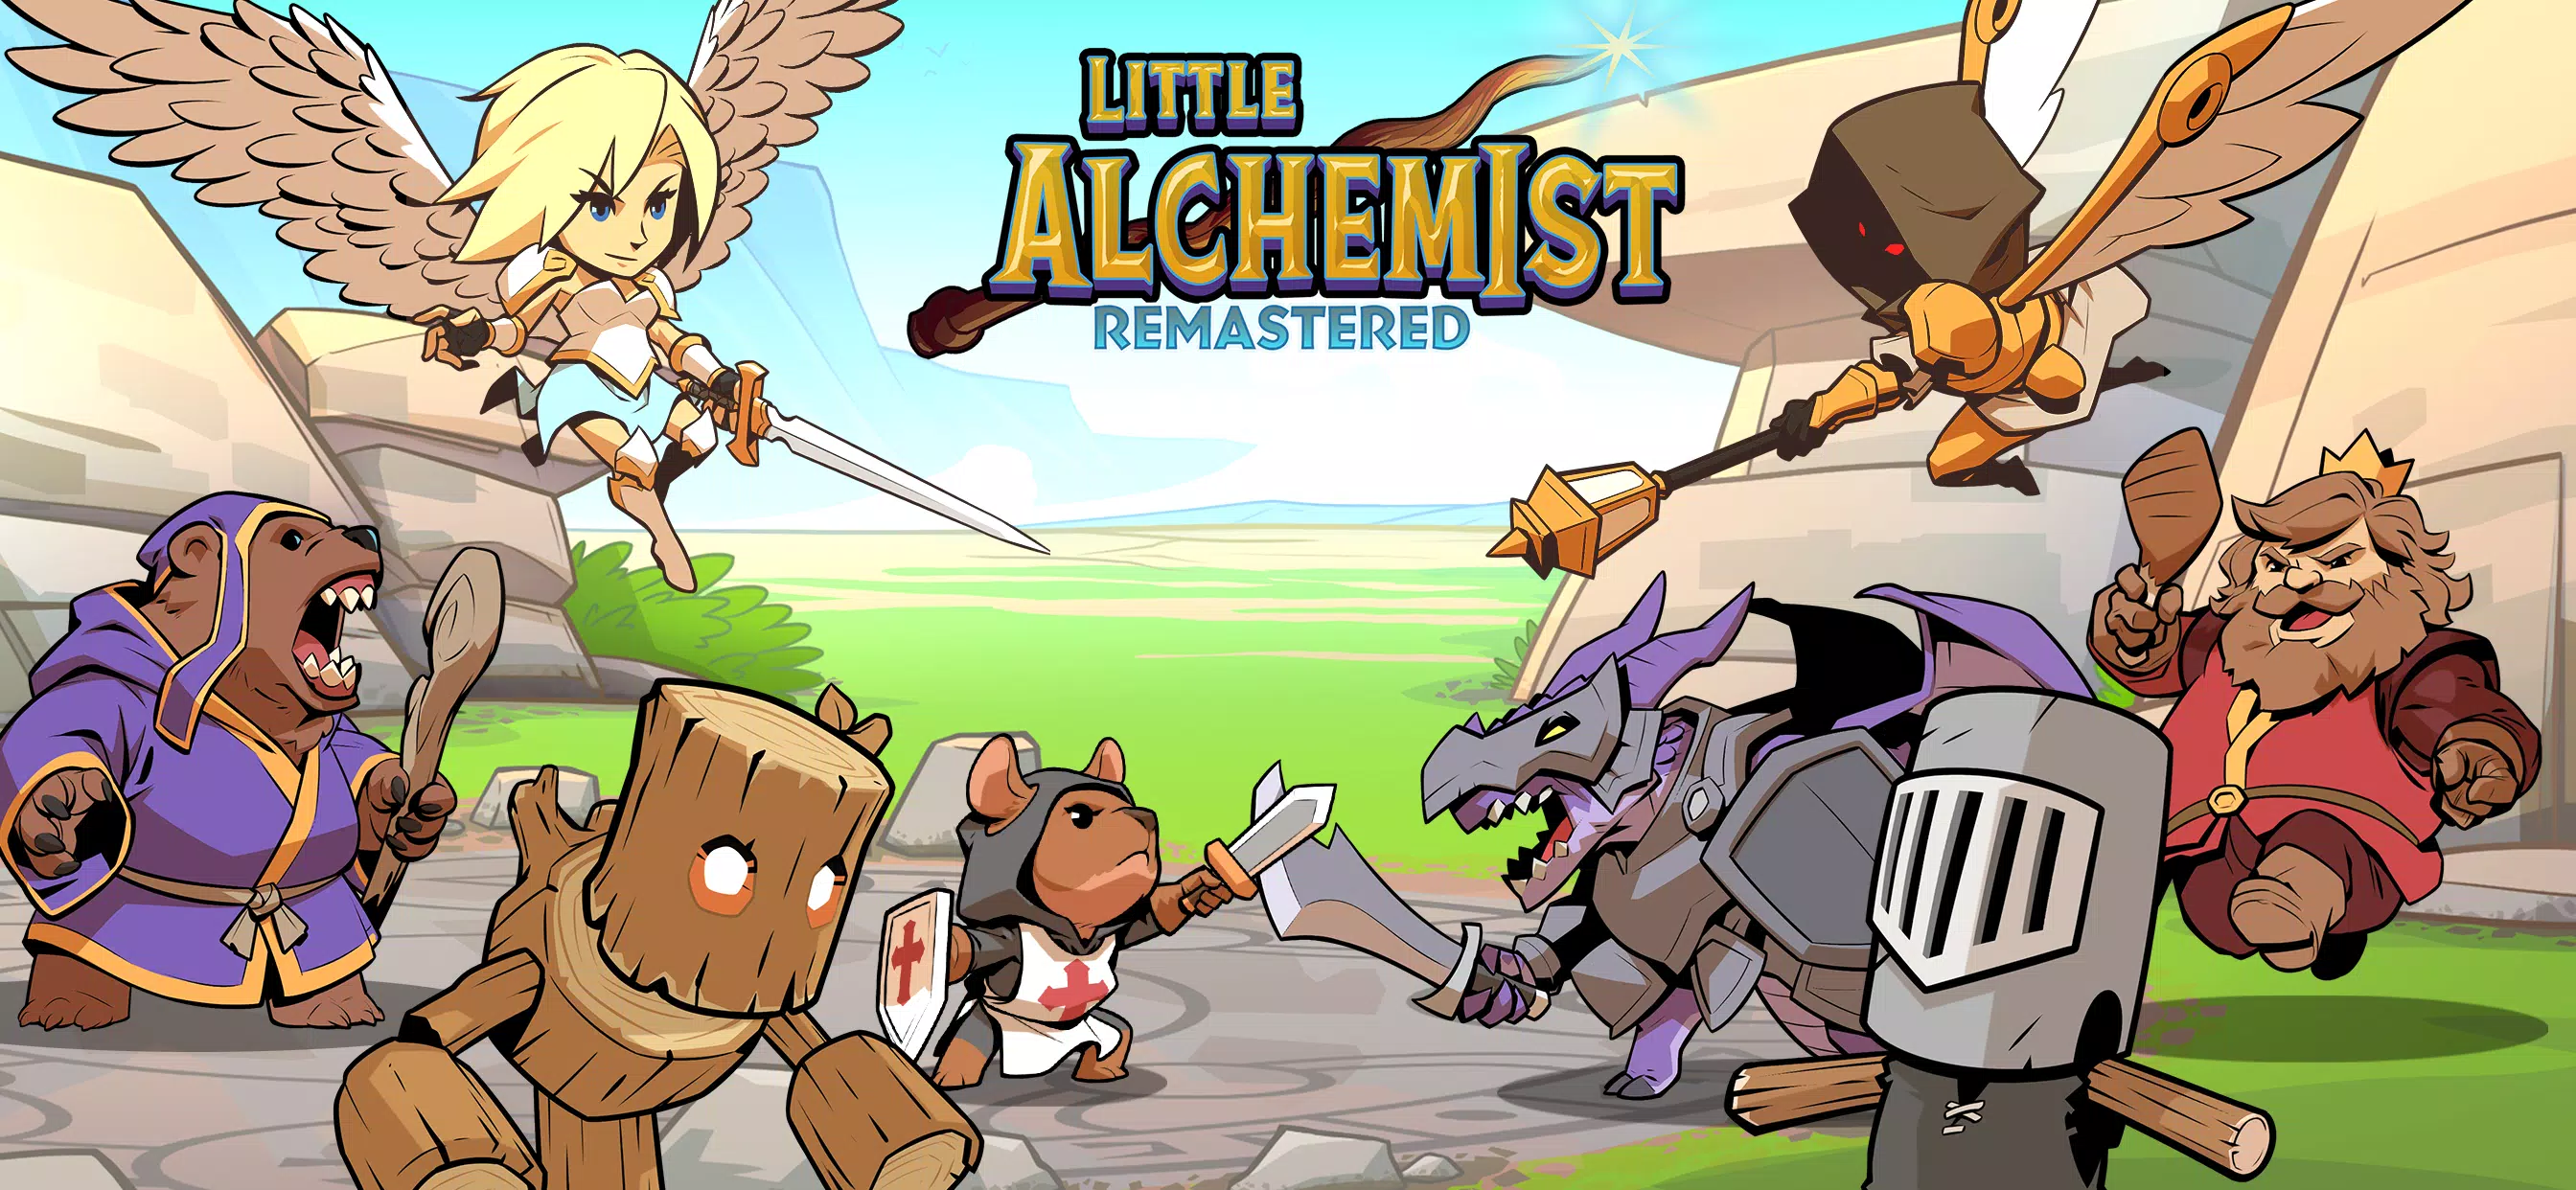 Little Alchemist APK for Android - Download